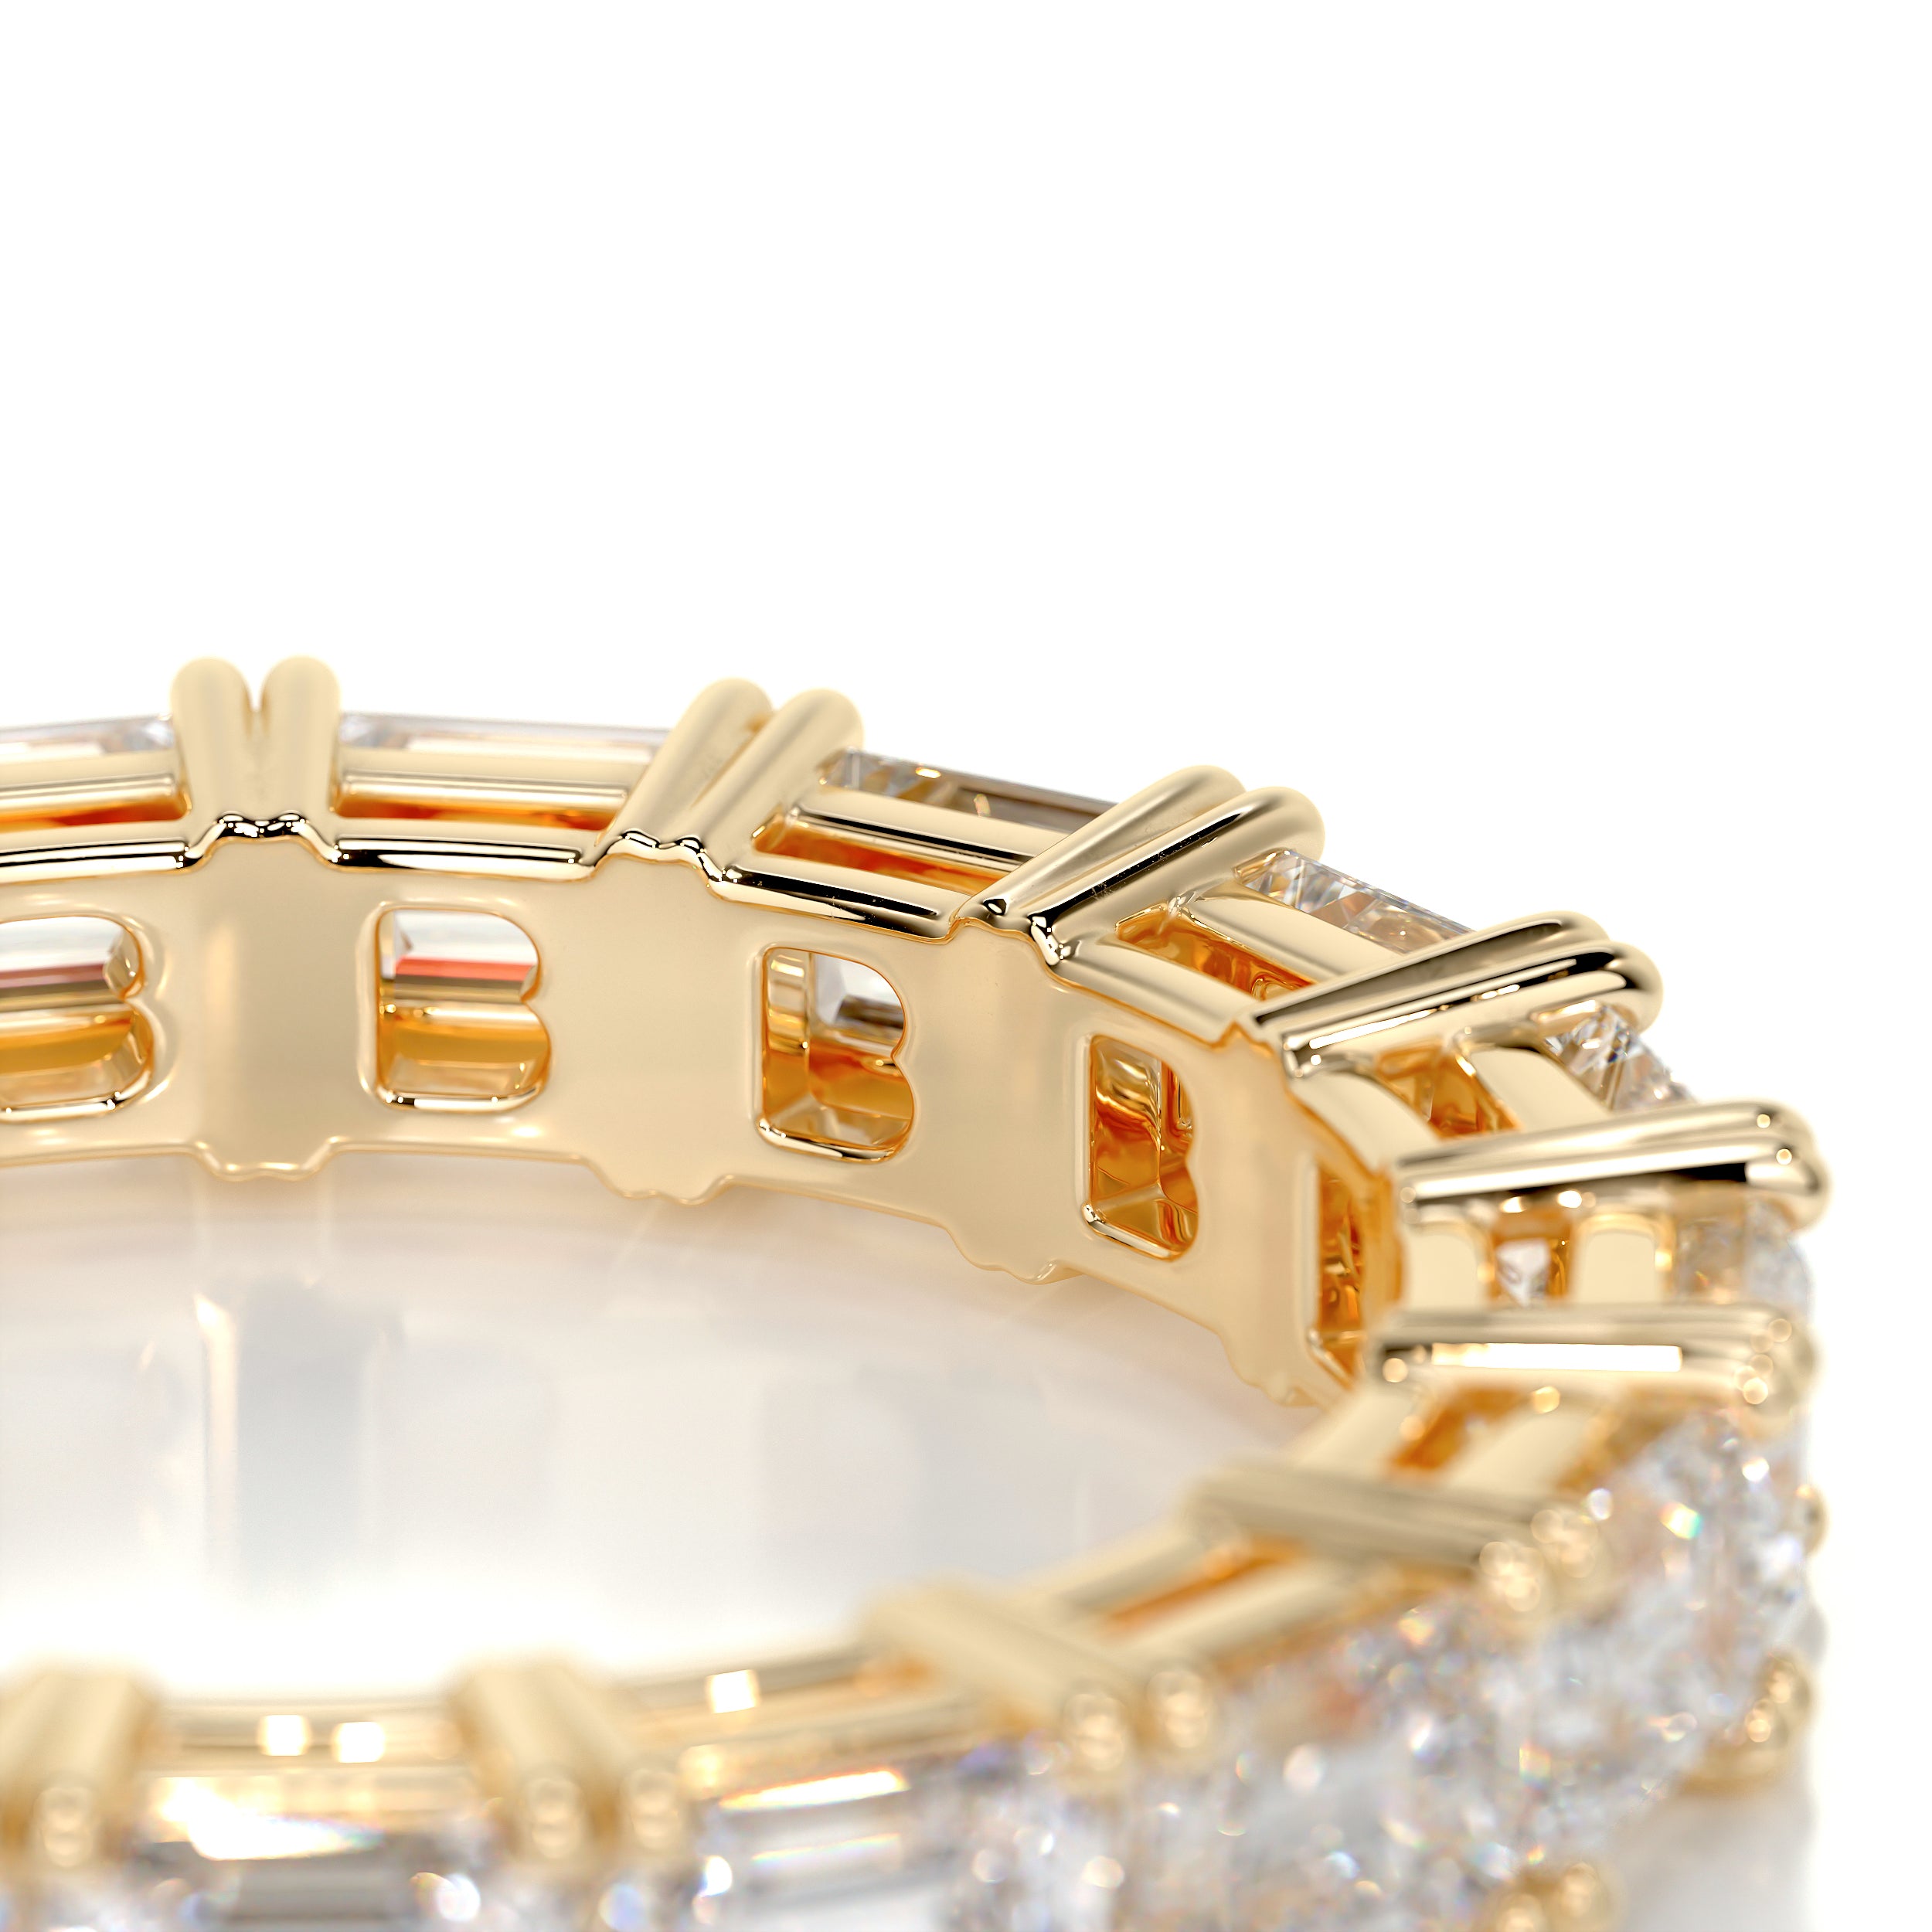 Vicky Diamond Wedding Ring -18K Yellow Gold